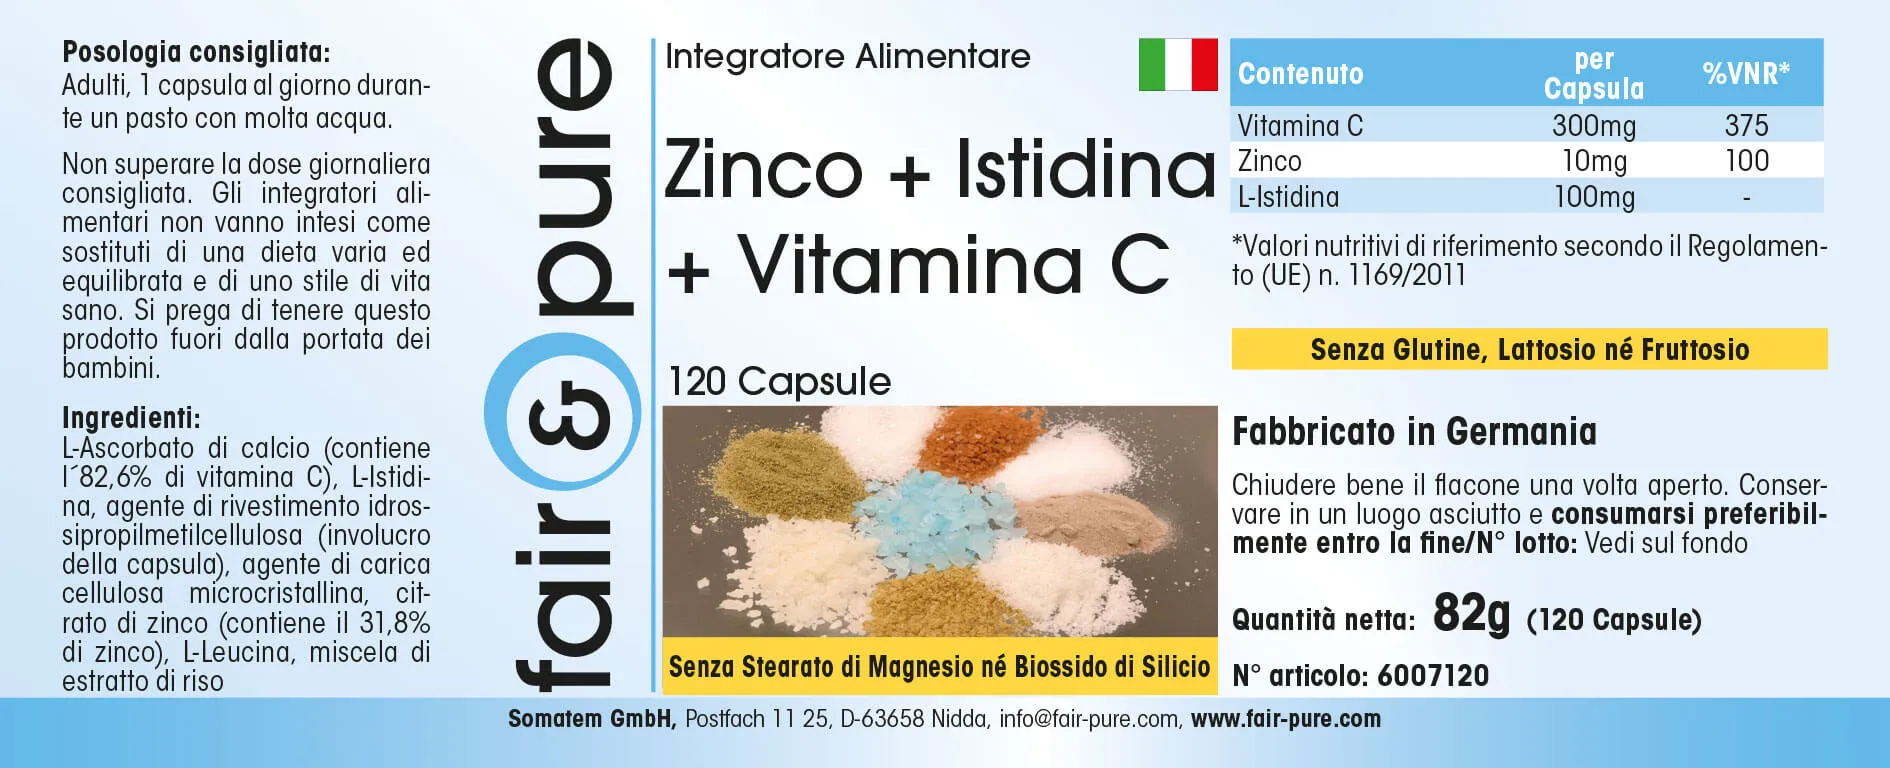 Zinc + Histidine + Vitamine C